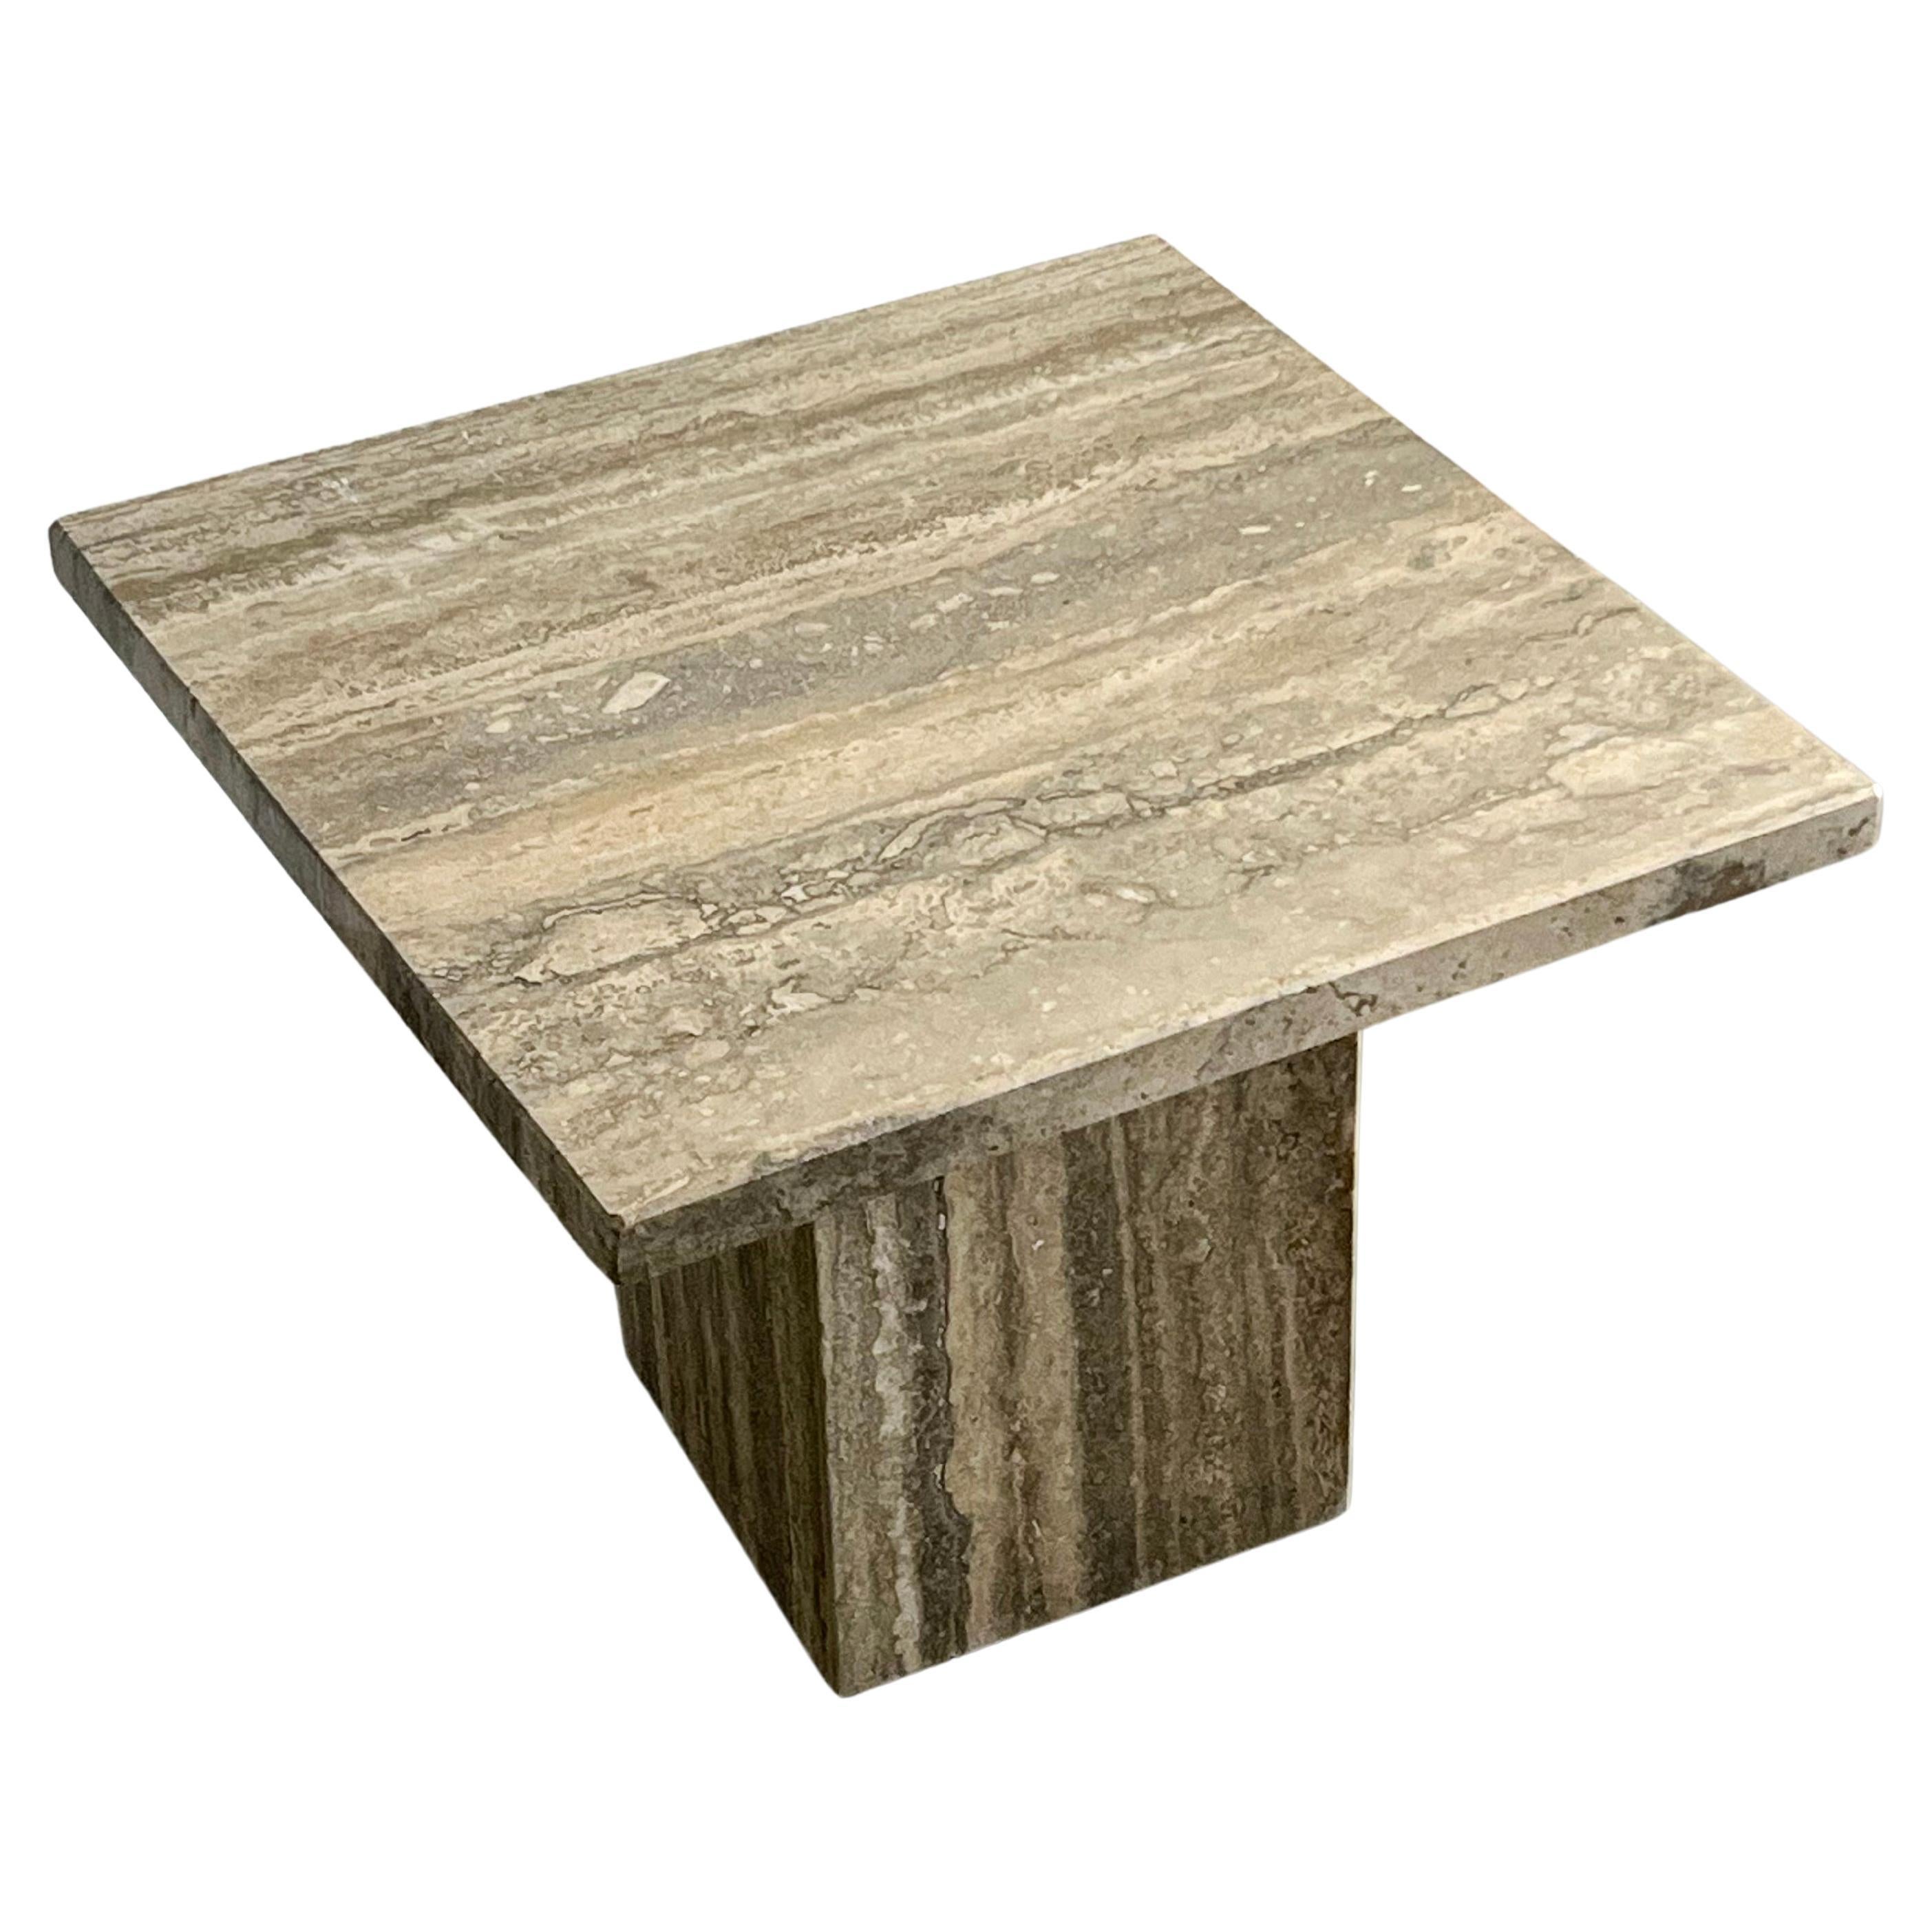 Mid-Century Modern Side Table in Travertine, Decorative Piece, Urban Wabi Style For Sale